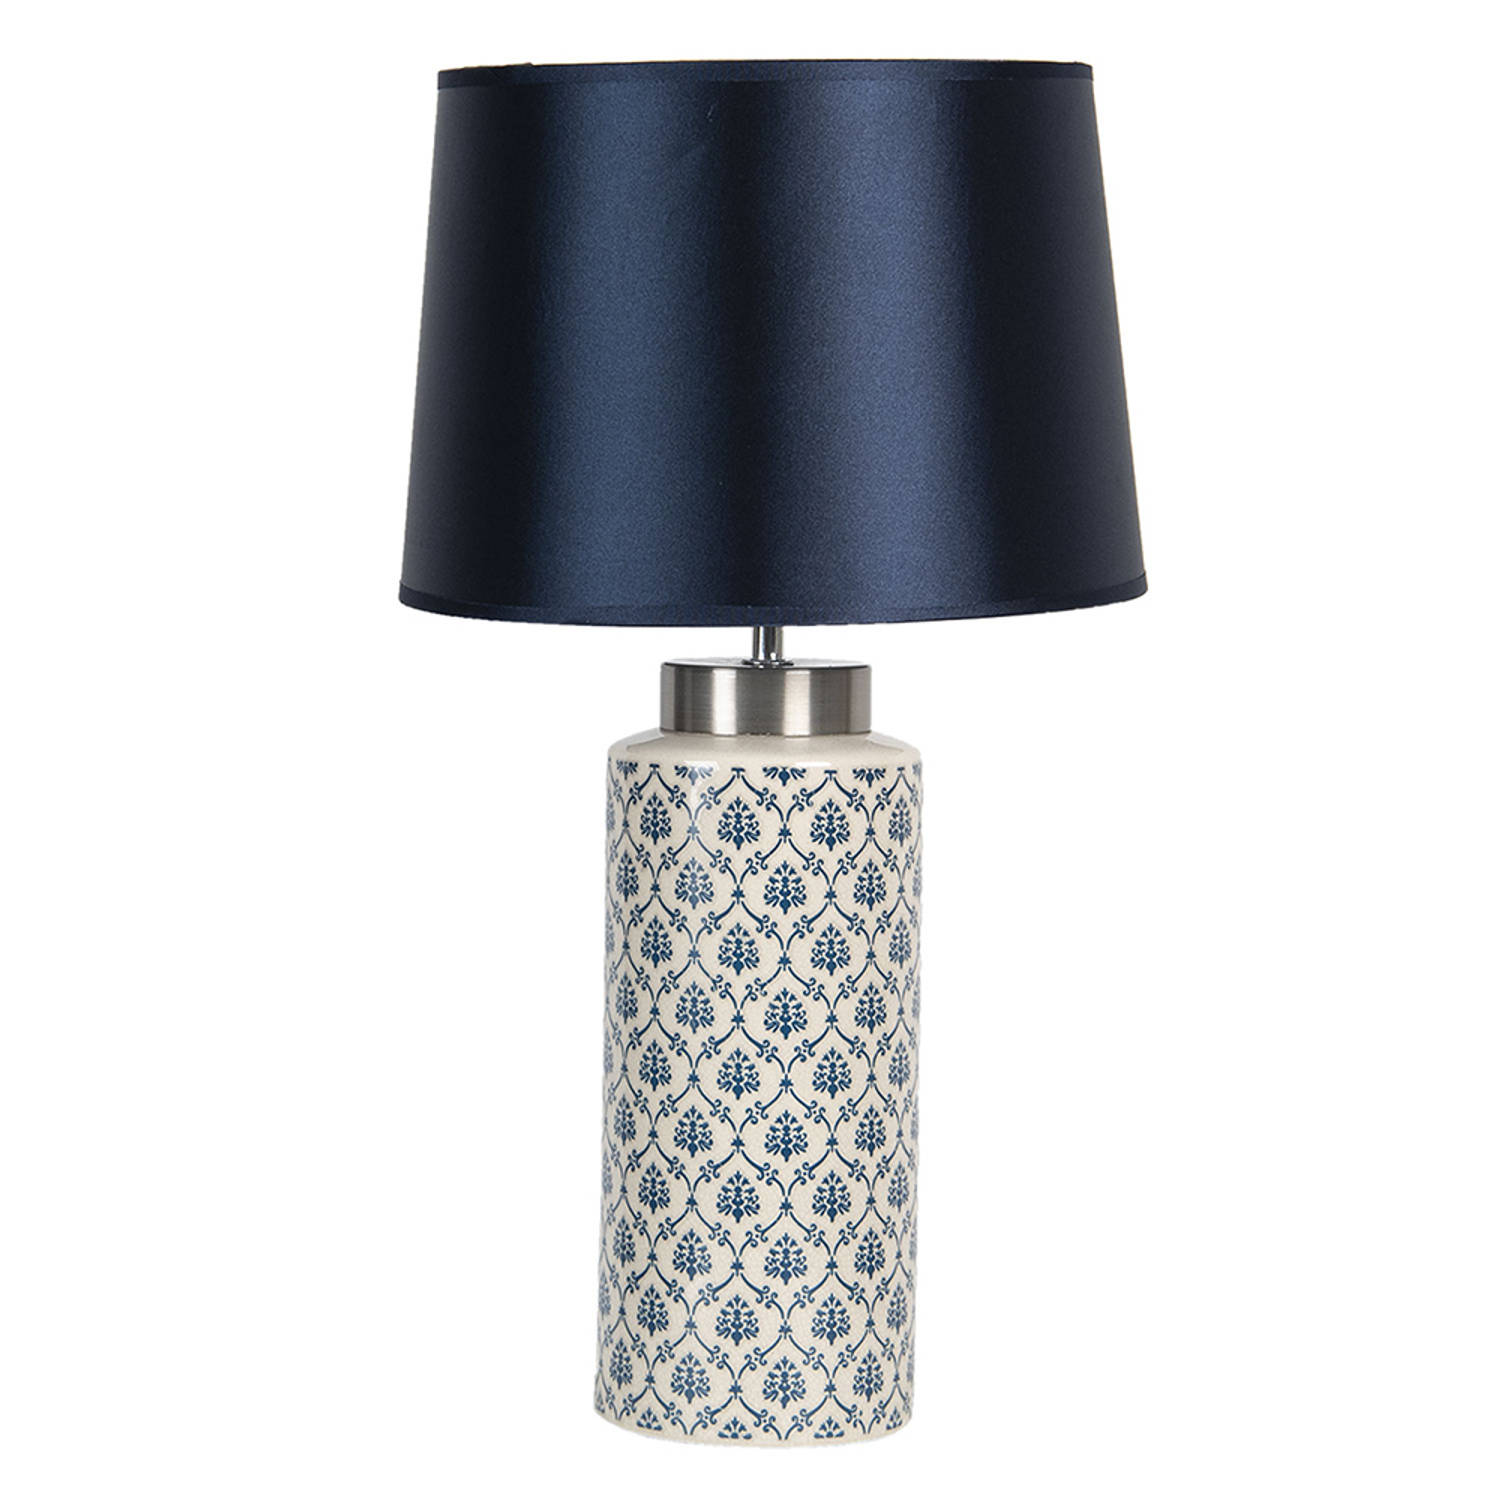 HAES DECO Tafellamp Modern Chic Elegante Lamp, Ø 28x50 cm Blauw-Wit Keramiek Bureaulamp, Sfeerlamp